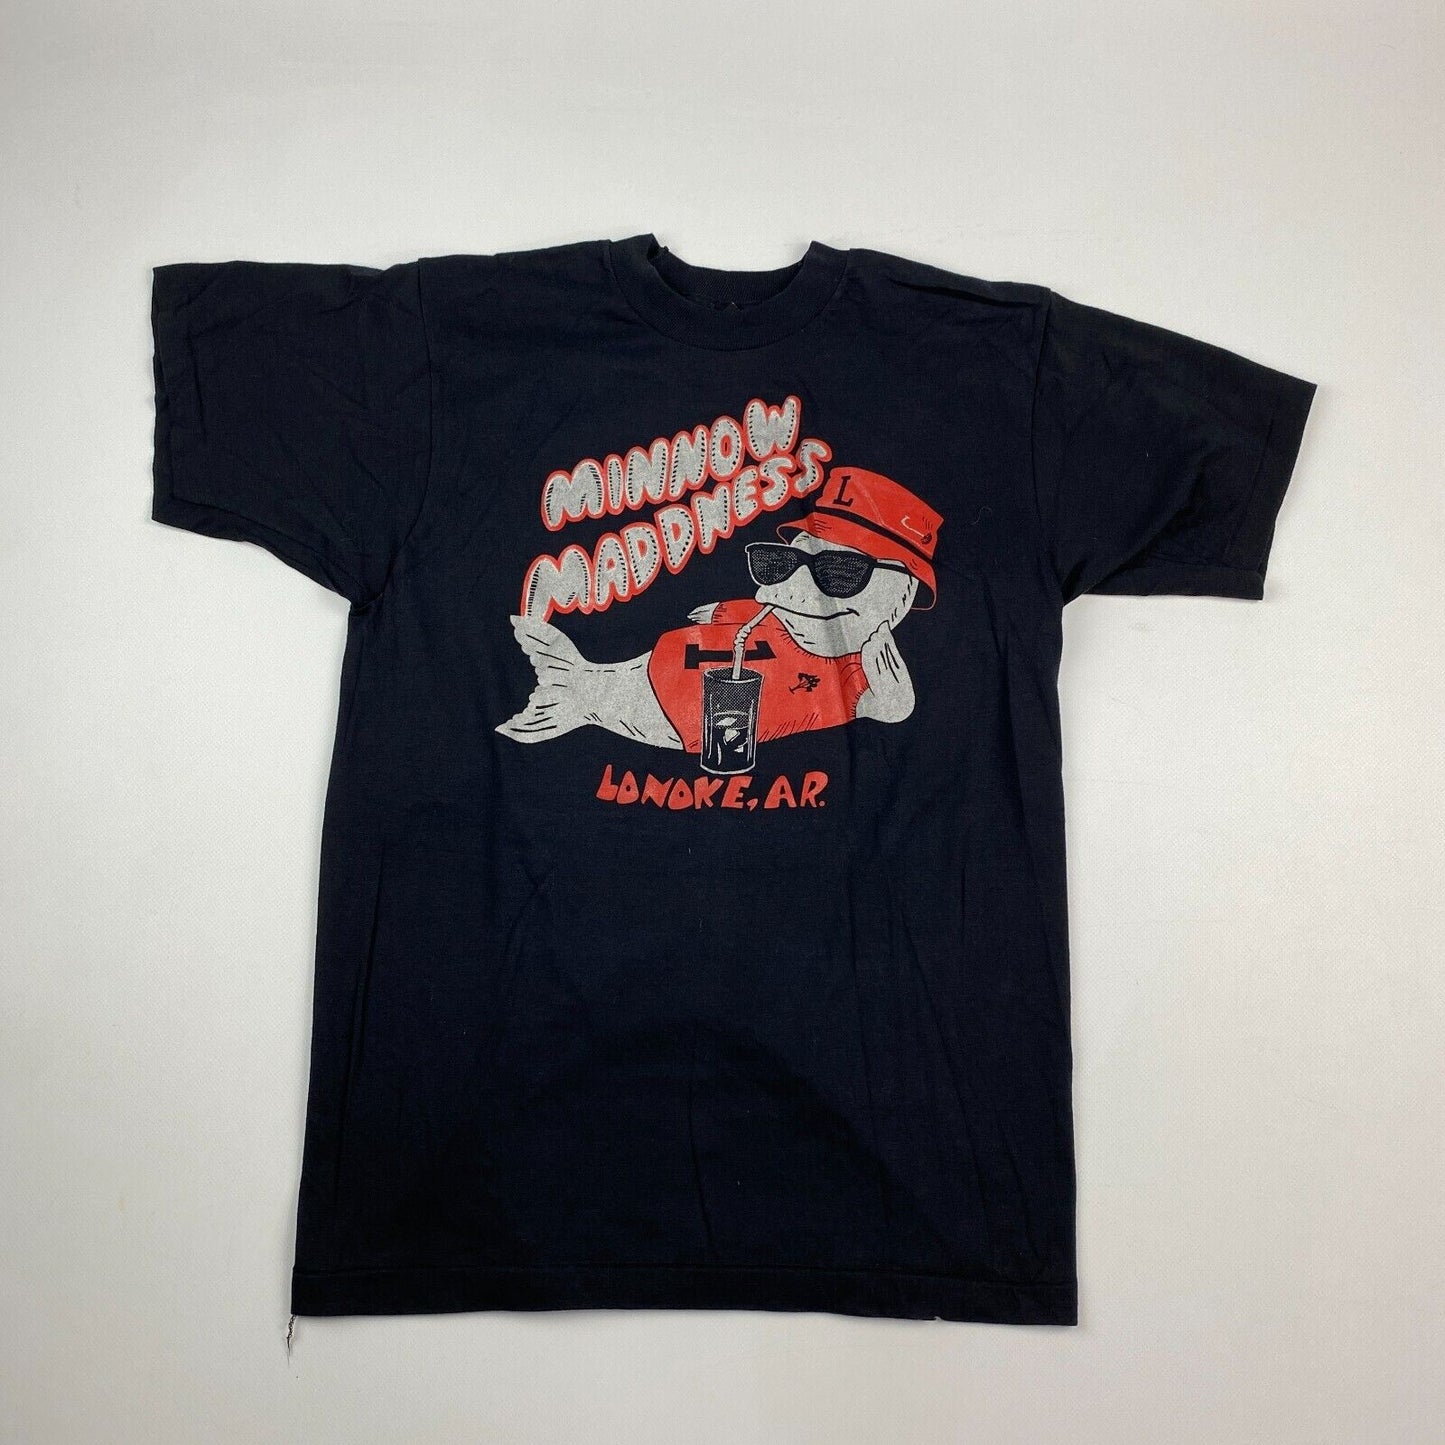 VINTAGE 80s Minnow Madness Lonoke Arkansas Black T-Shirt sz S Mens